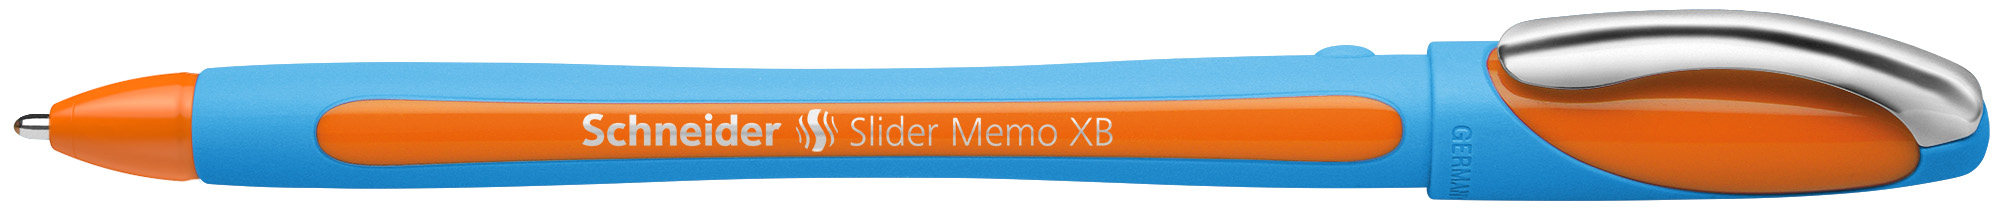 STY SLIDER MEMO XB ORANGE REF150206